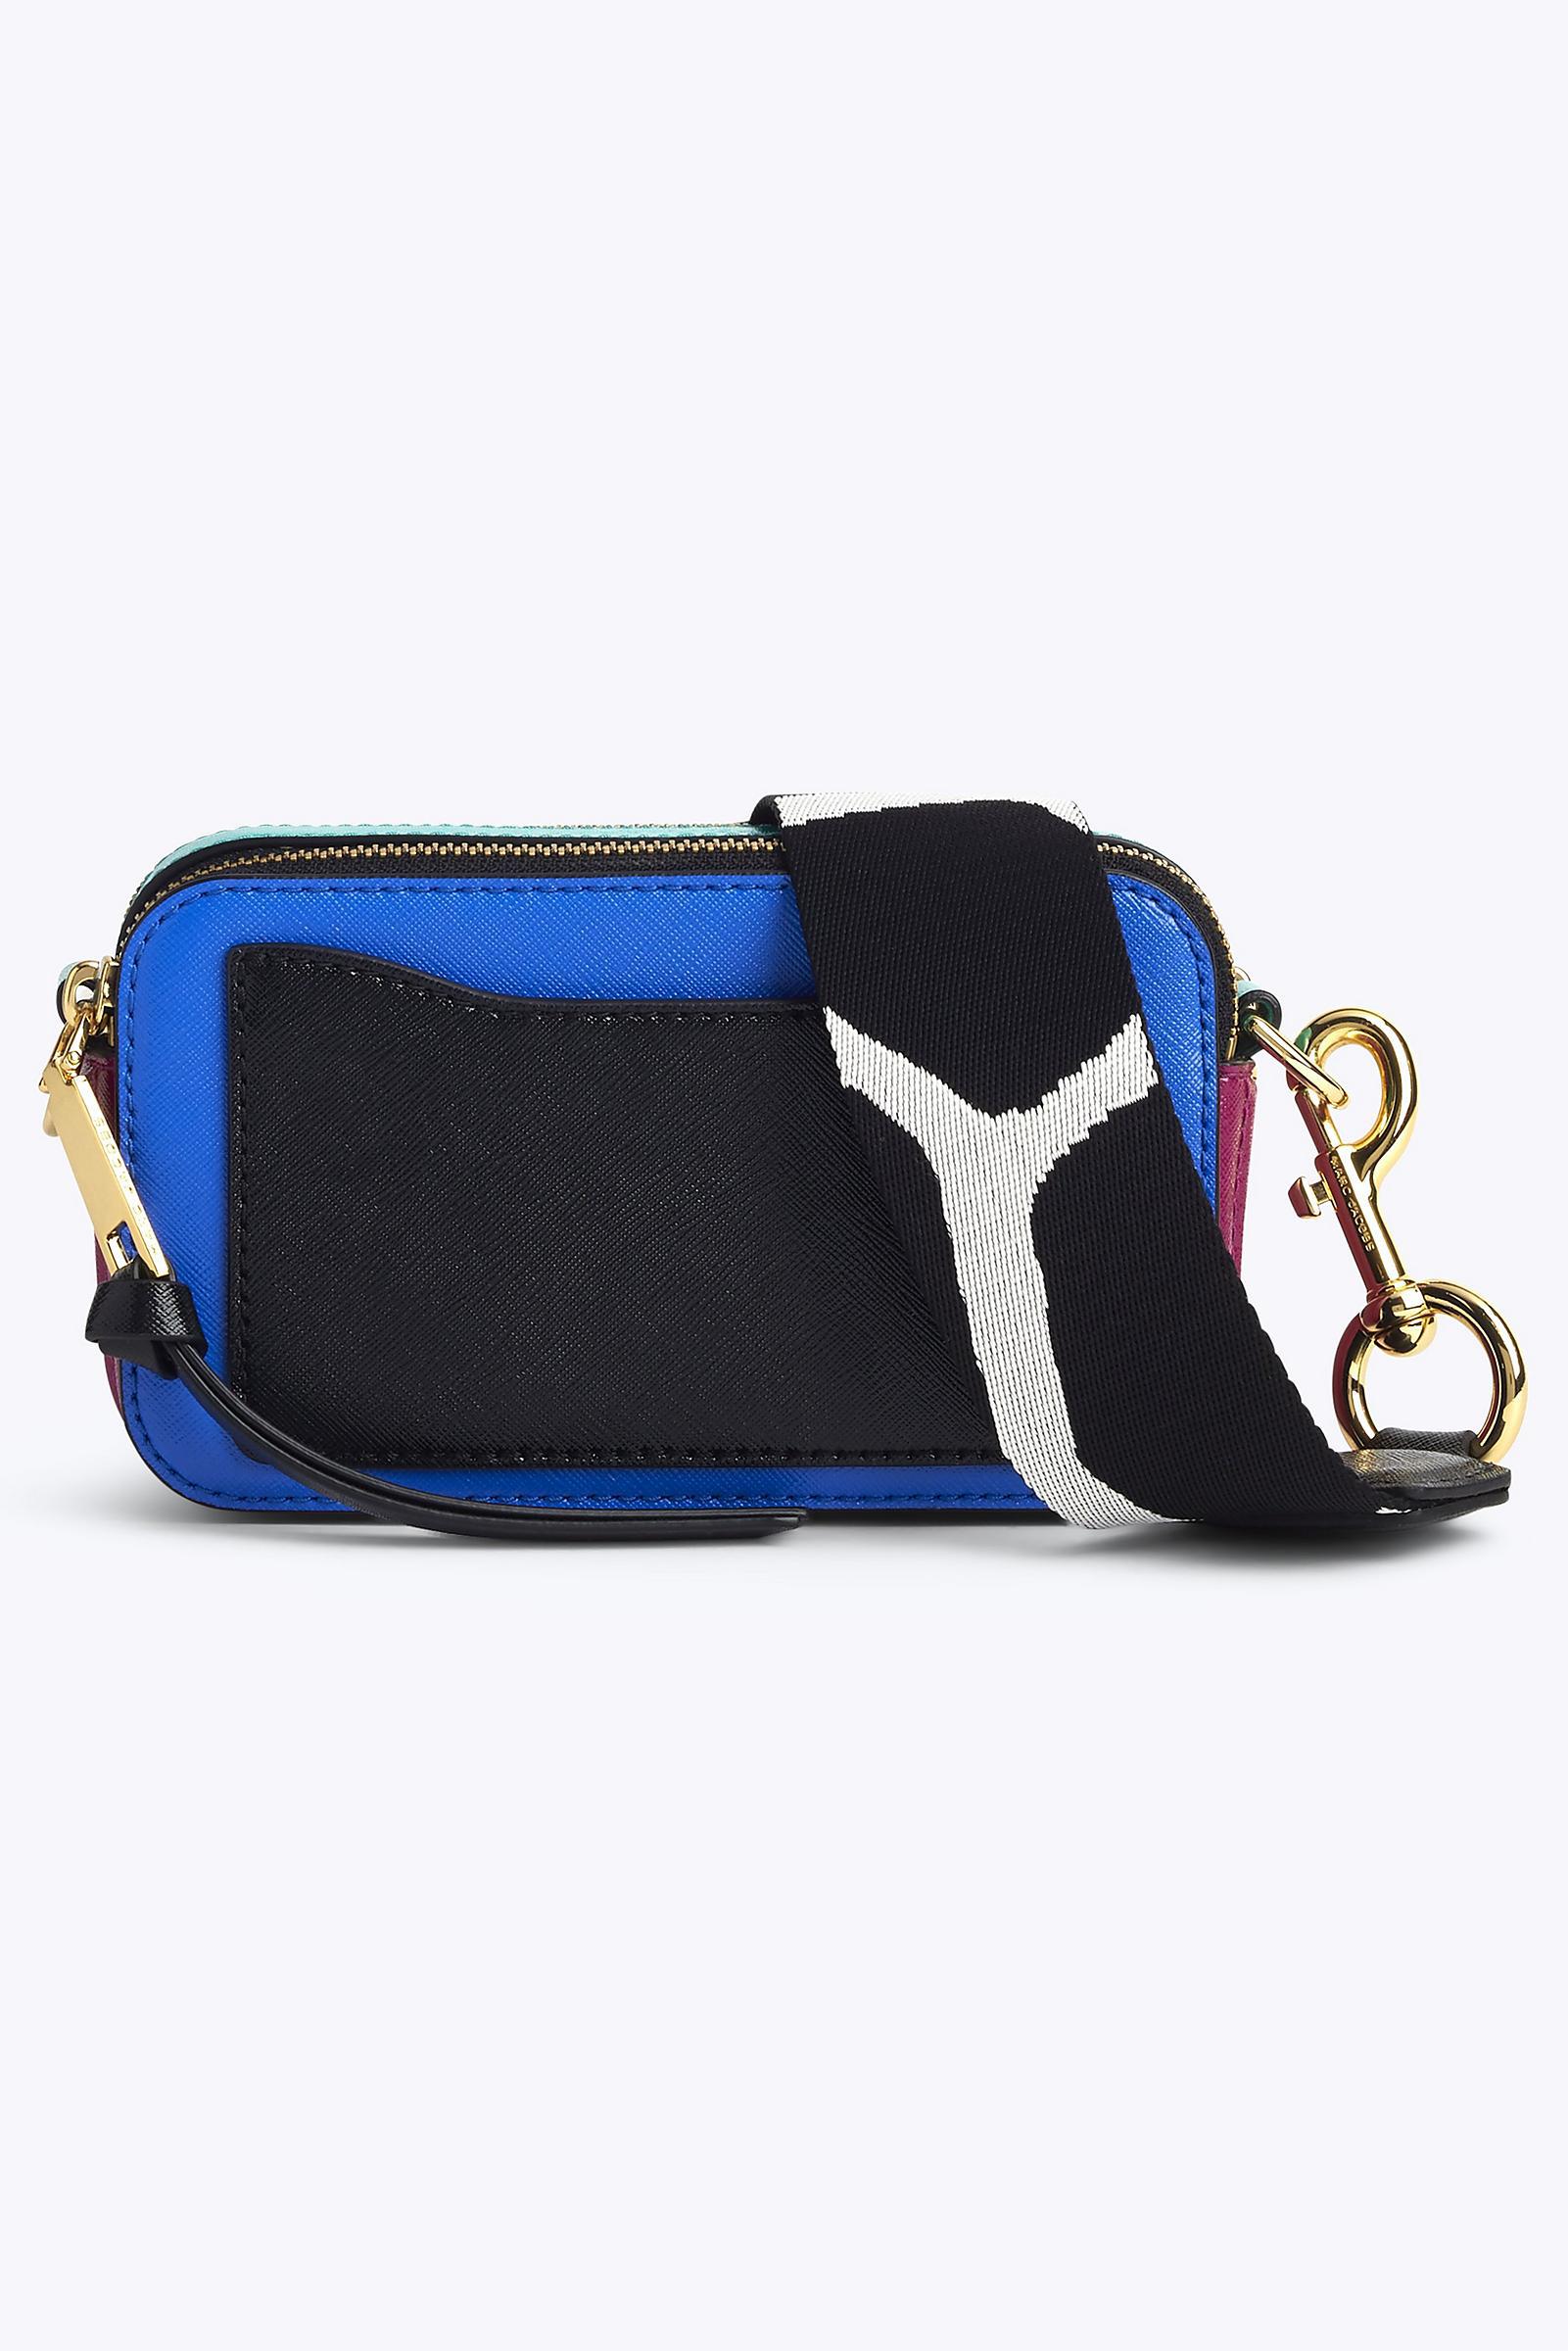 Marc Jacobs Women's Snapshot Crossbody Bag, New Coconut Multi